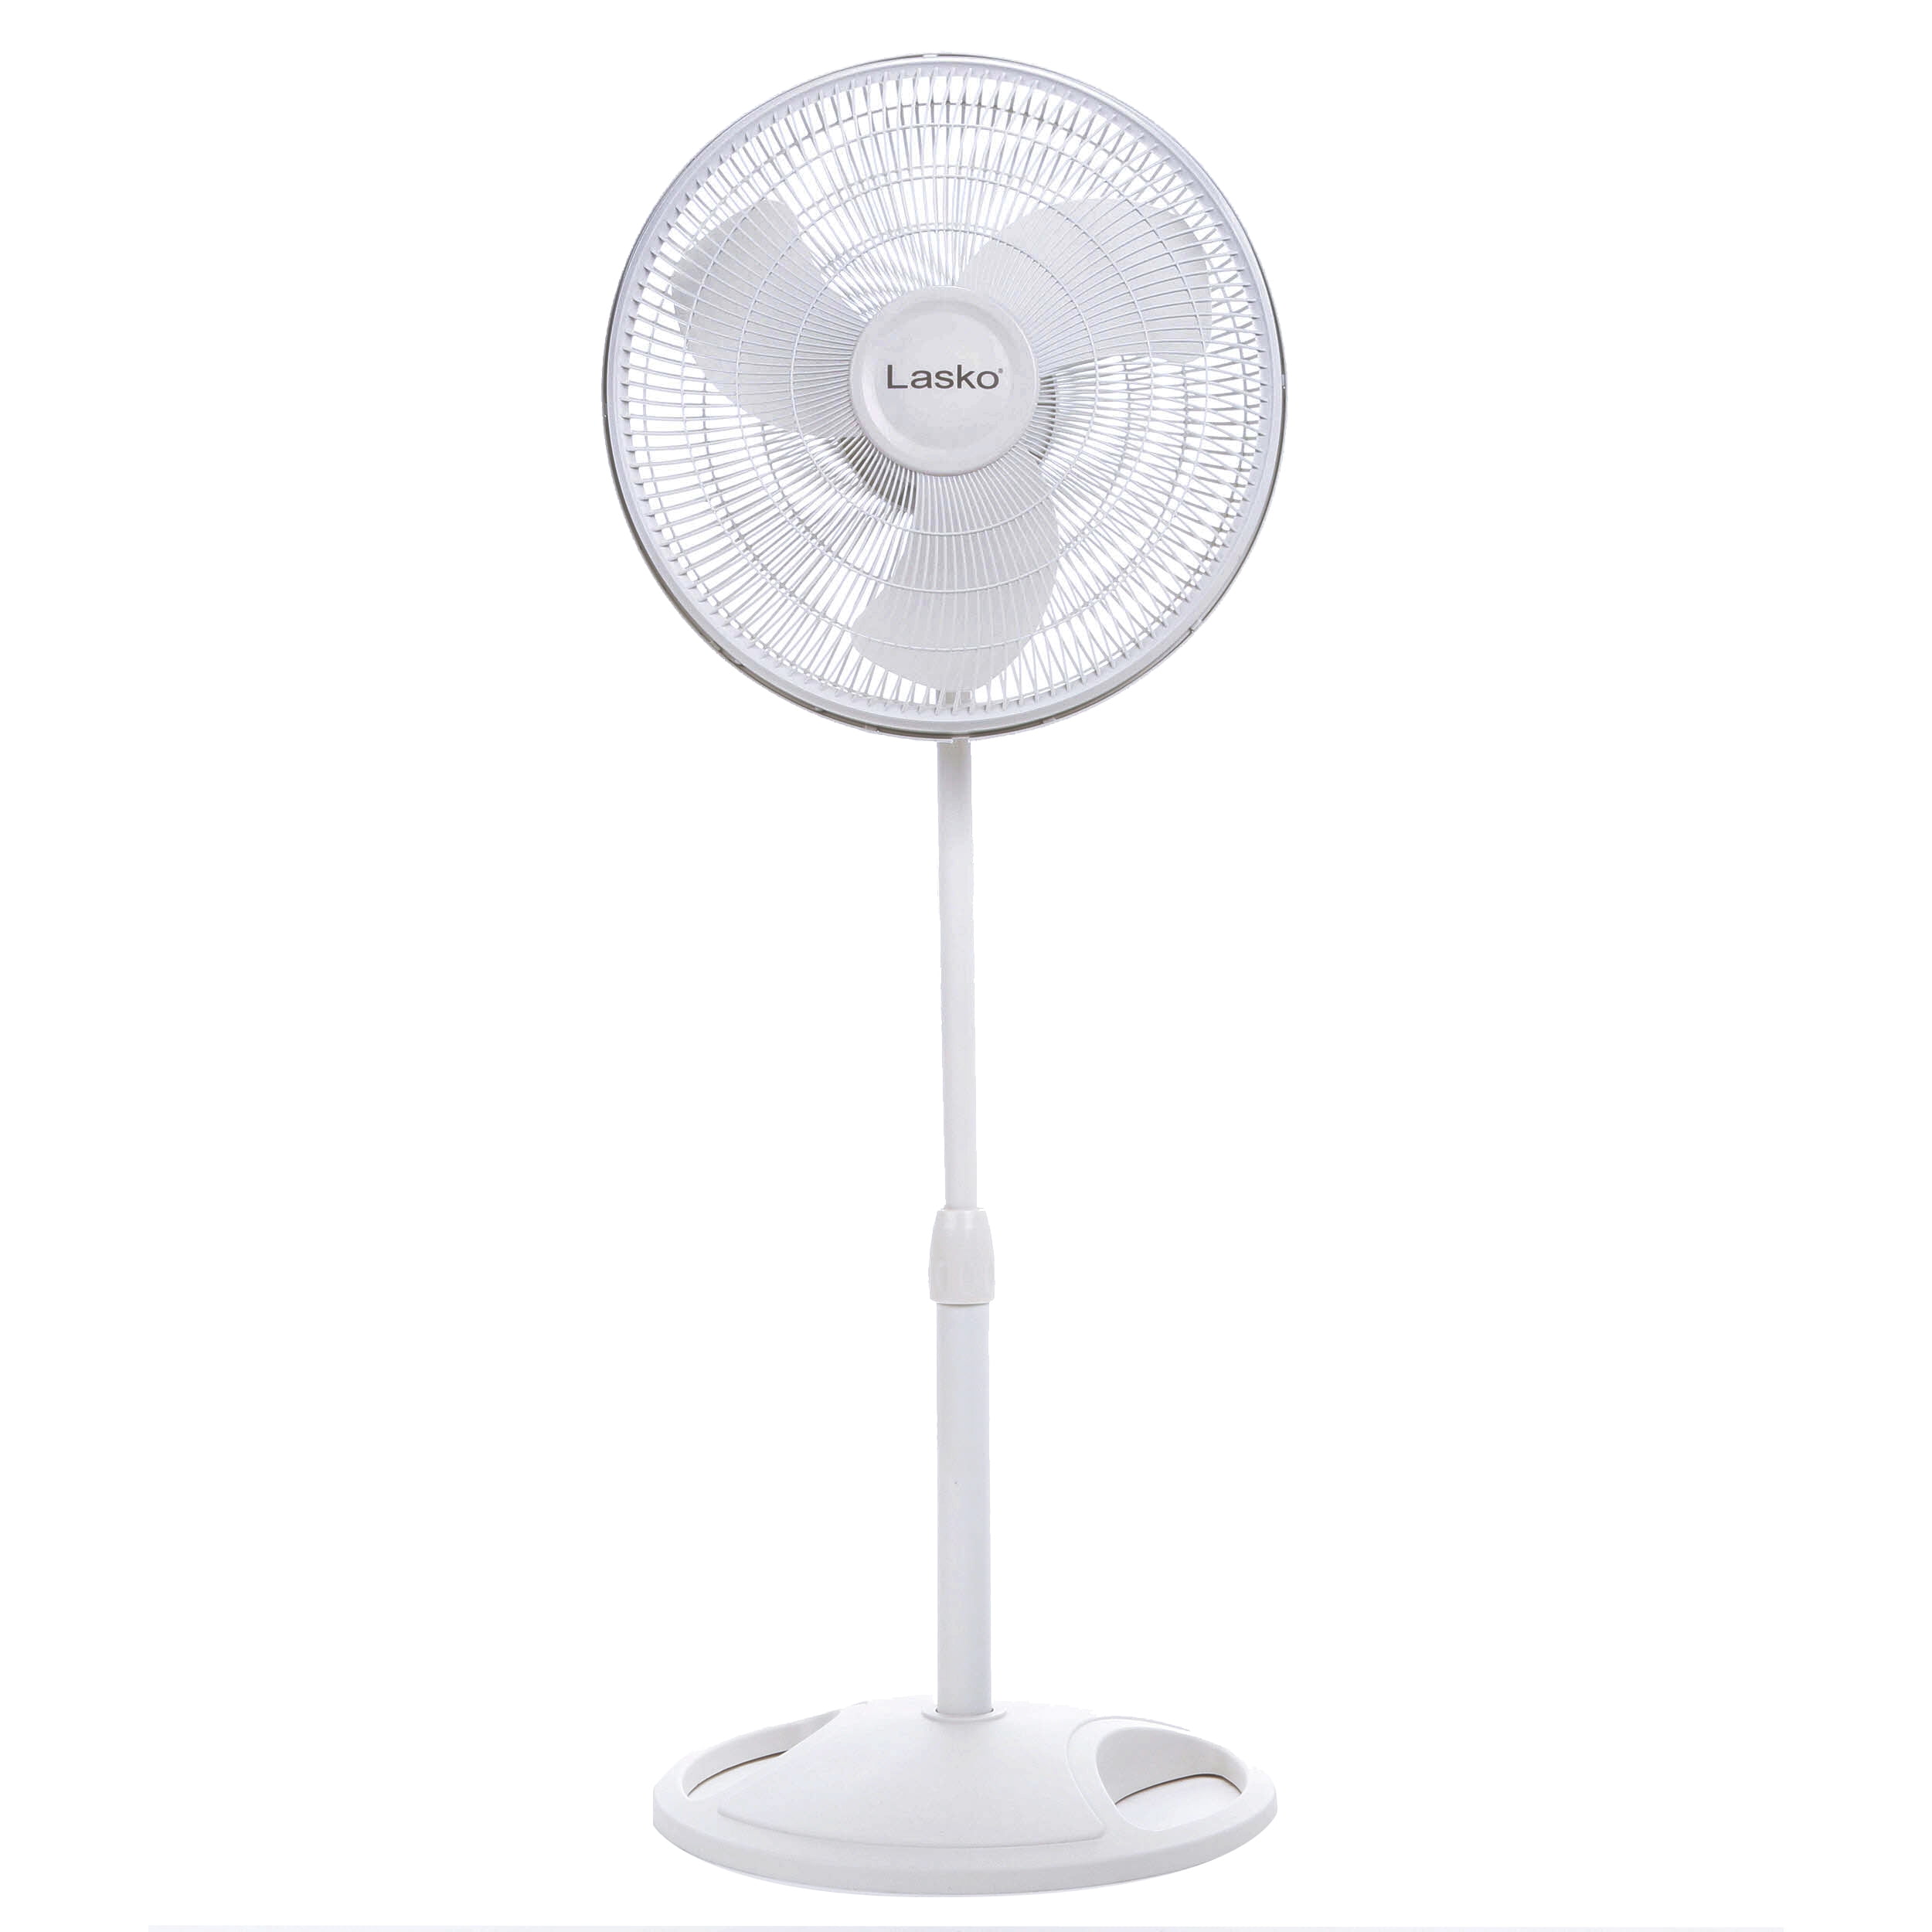 16” Adjustable Oscillating Pedestal Fan Stand Floor 3 Speed Home White NEW